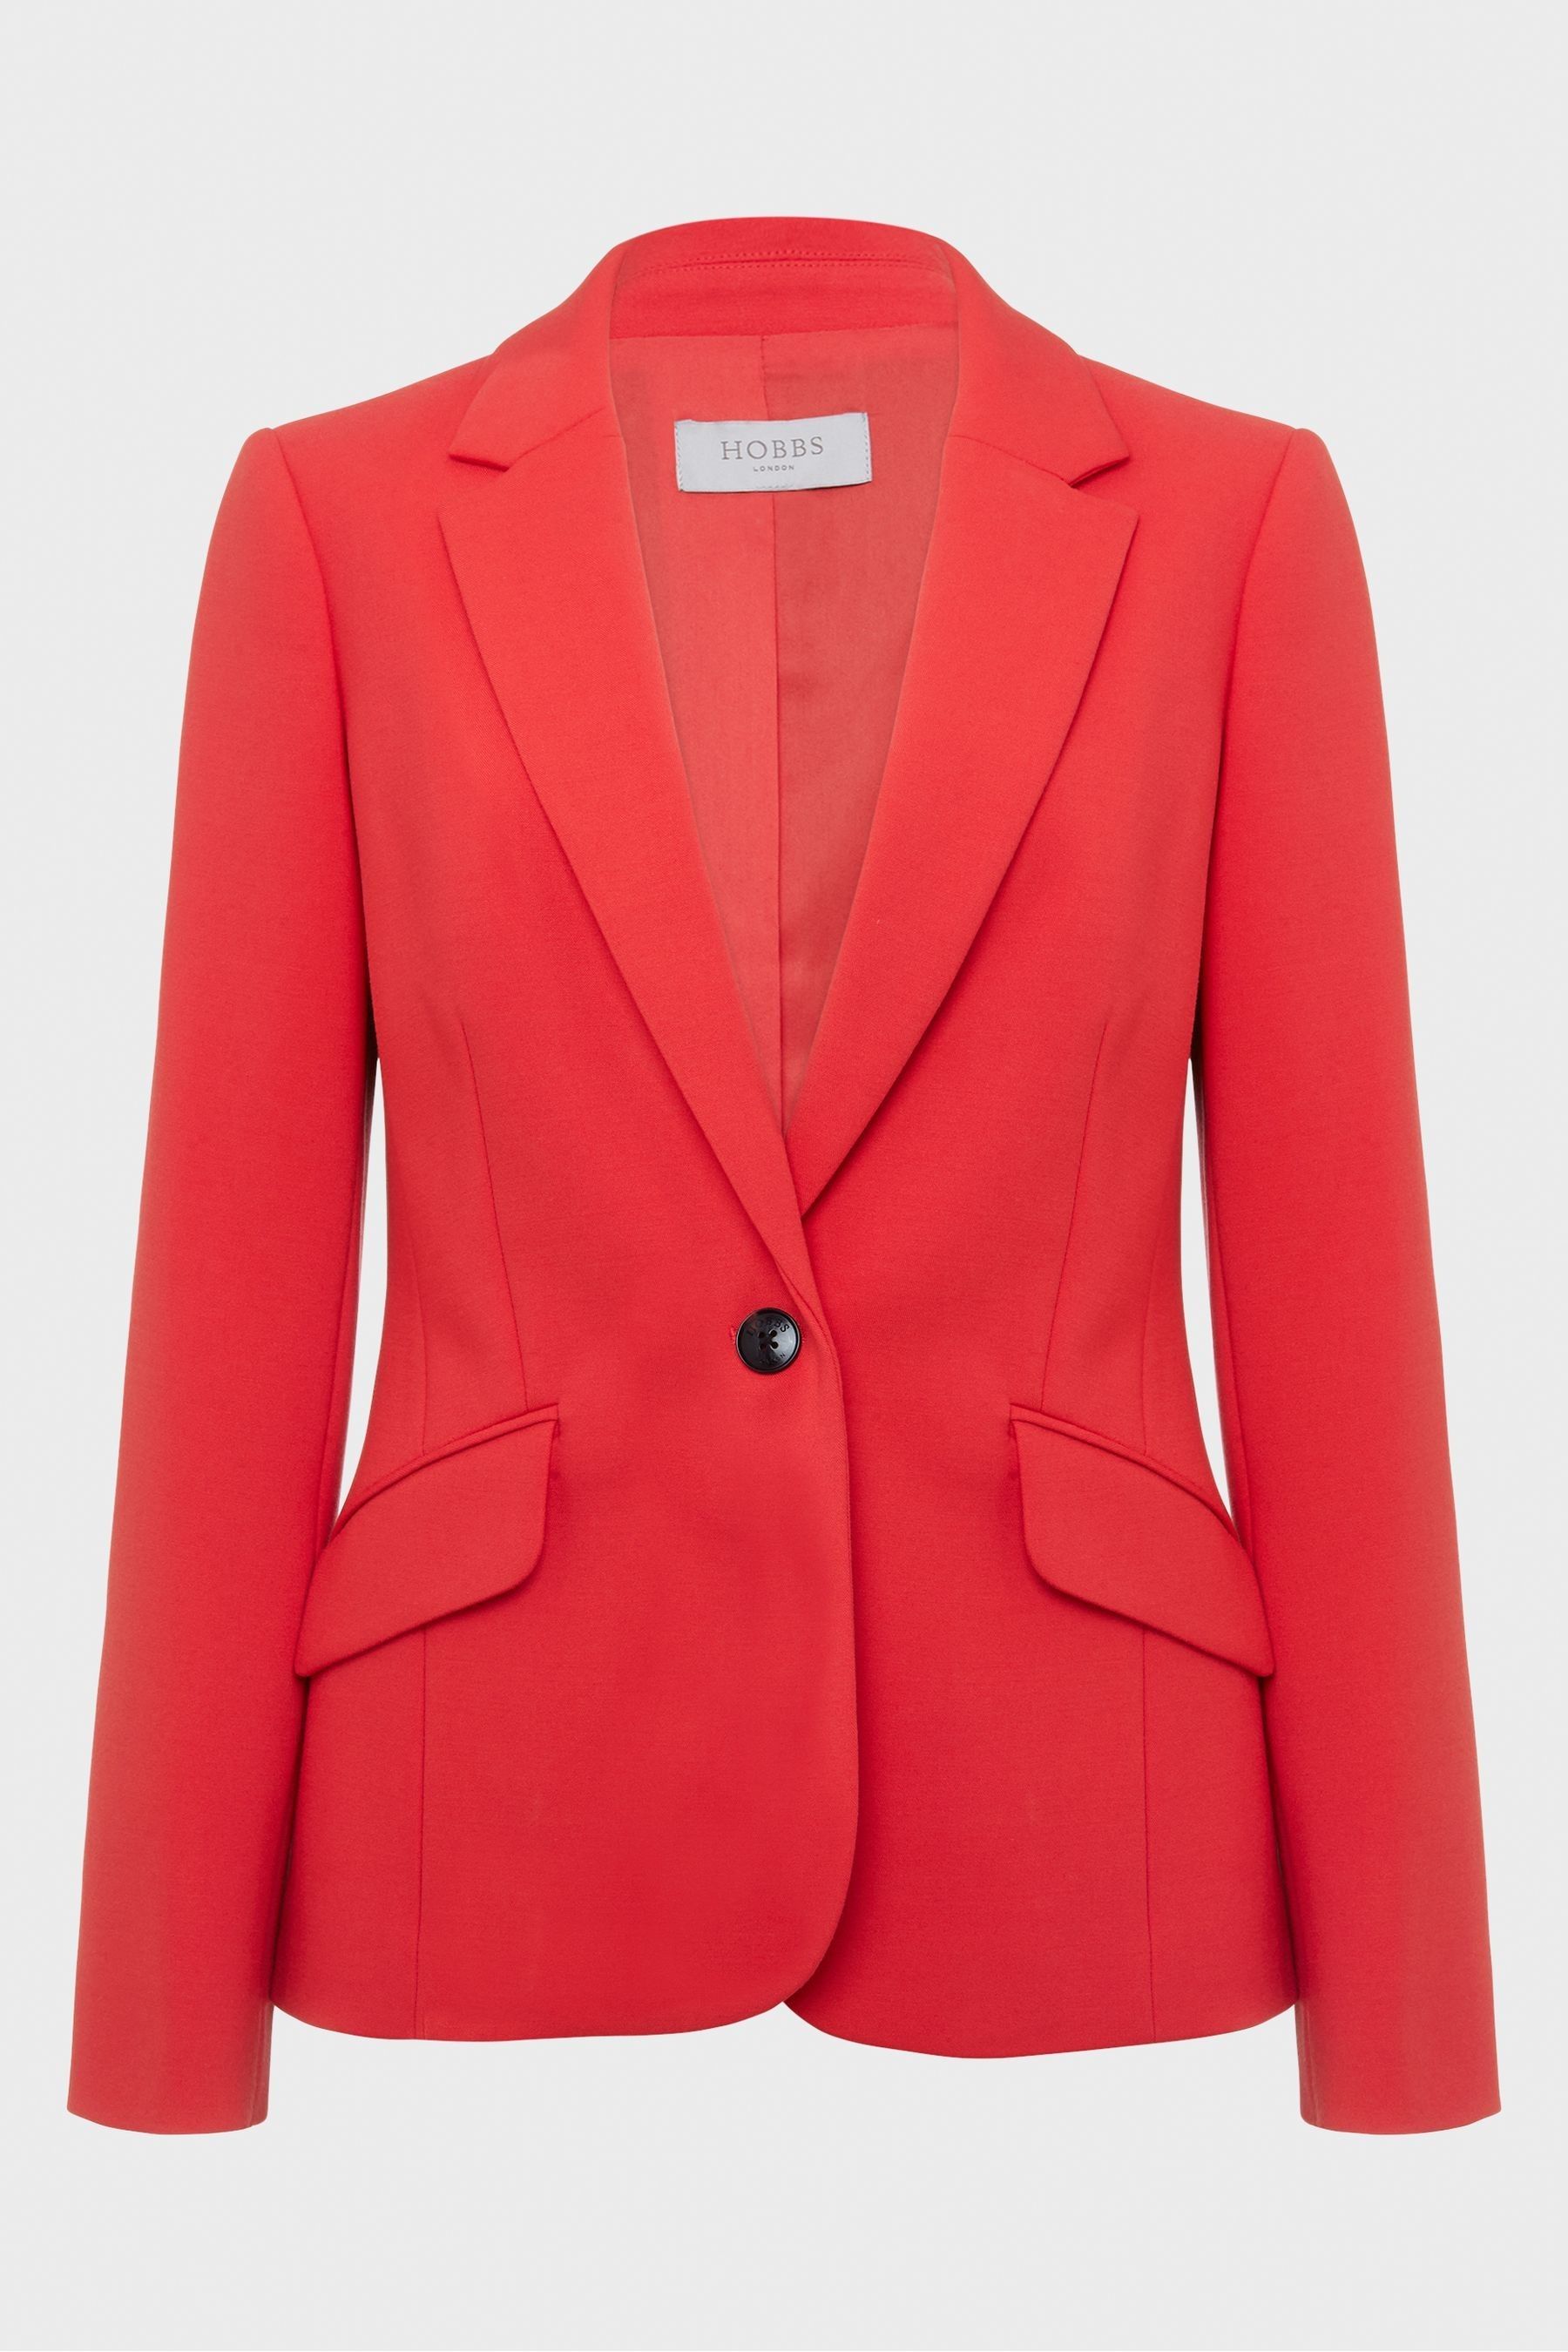 Buy Hobbs Petite Red Suki Jacket from the Next UK online shop